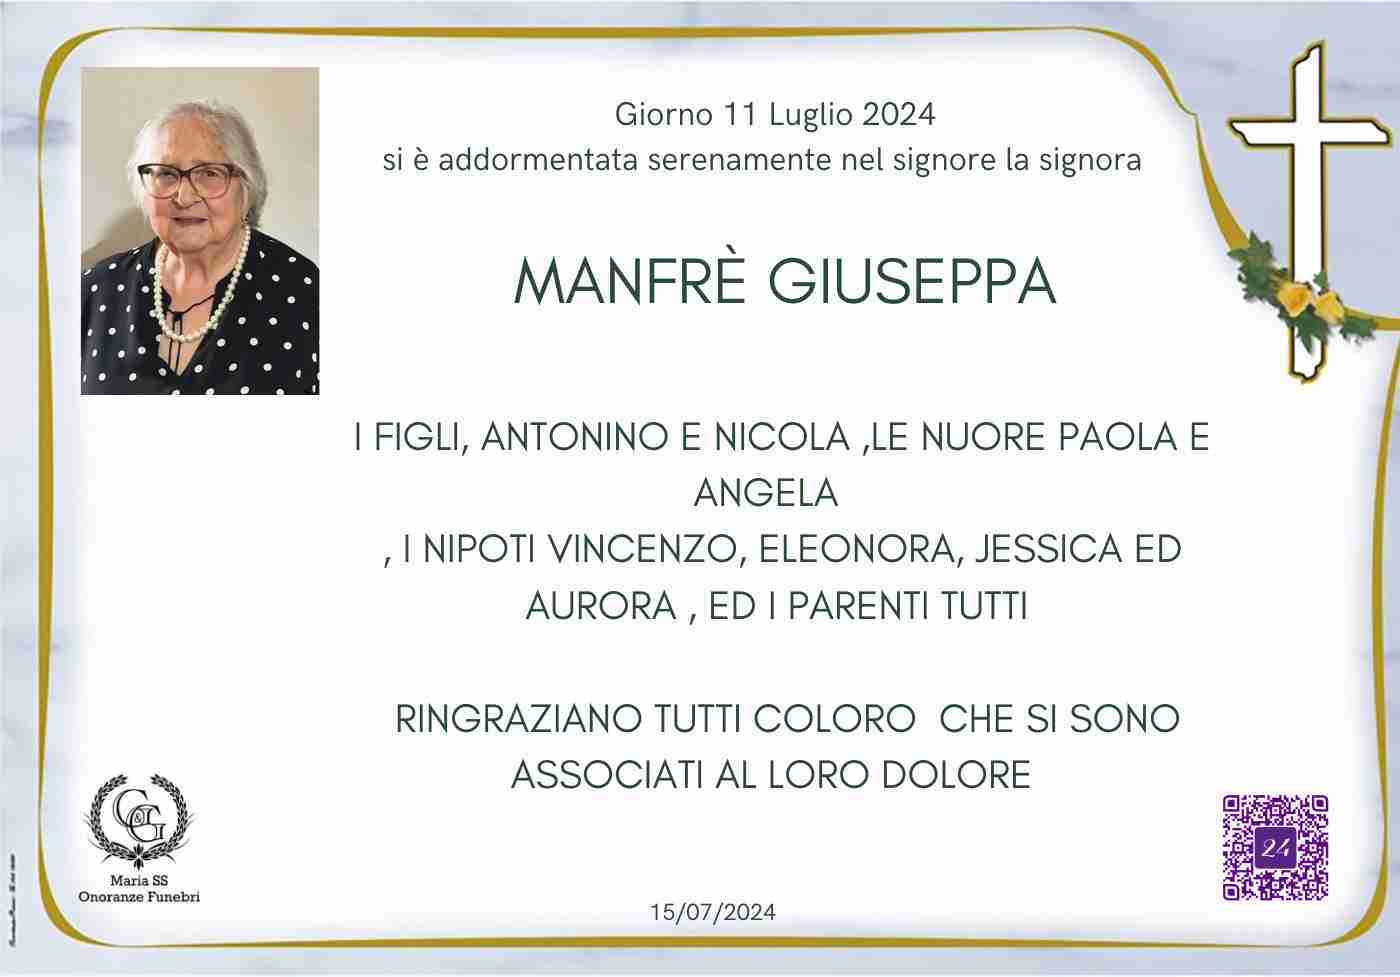 Giuseppa Manfrè